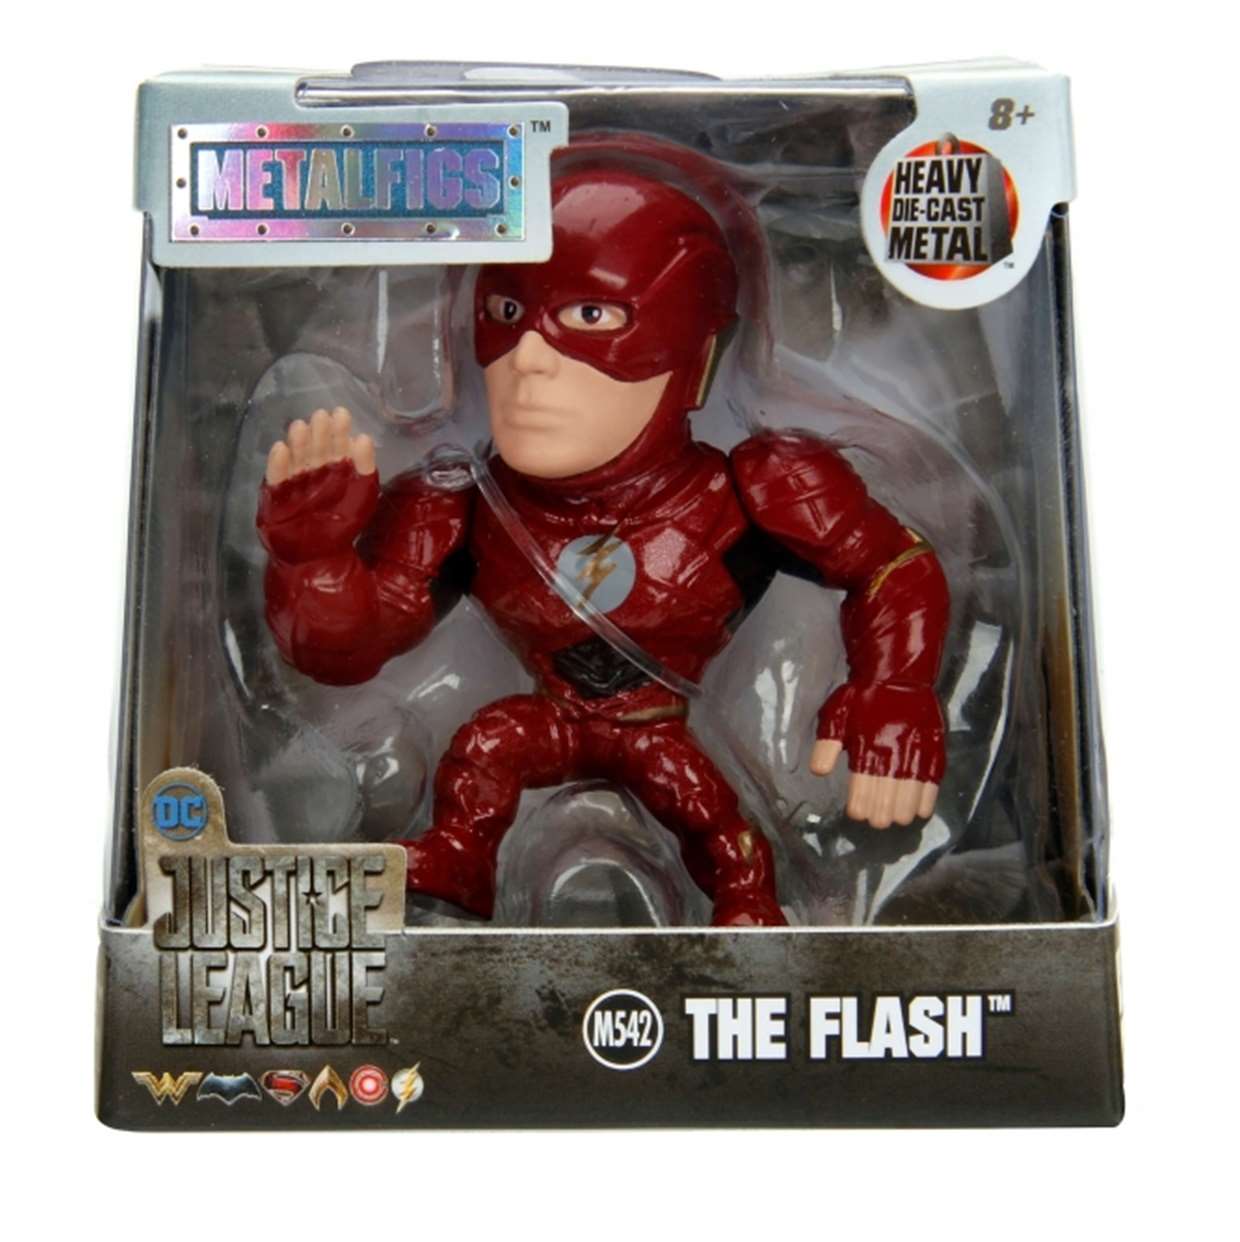 The Flash M542 Figura Dc Comics Justice League Metalfigs 